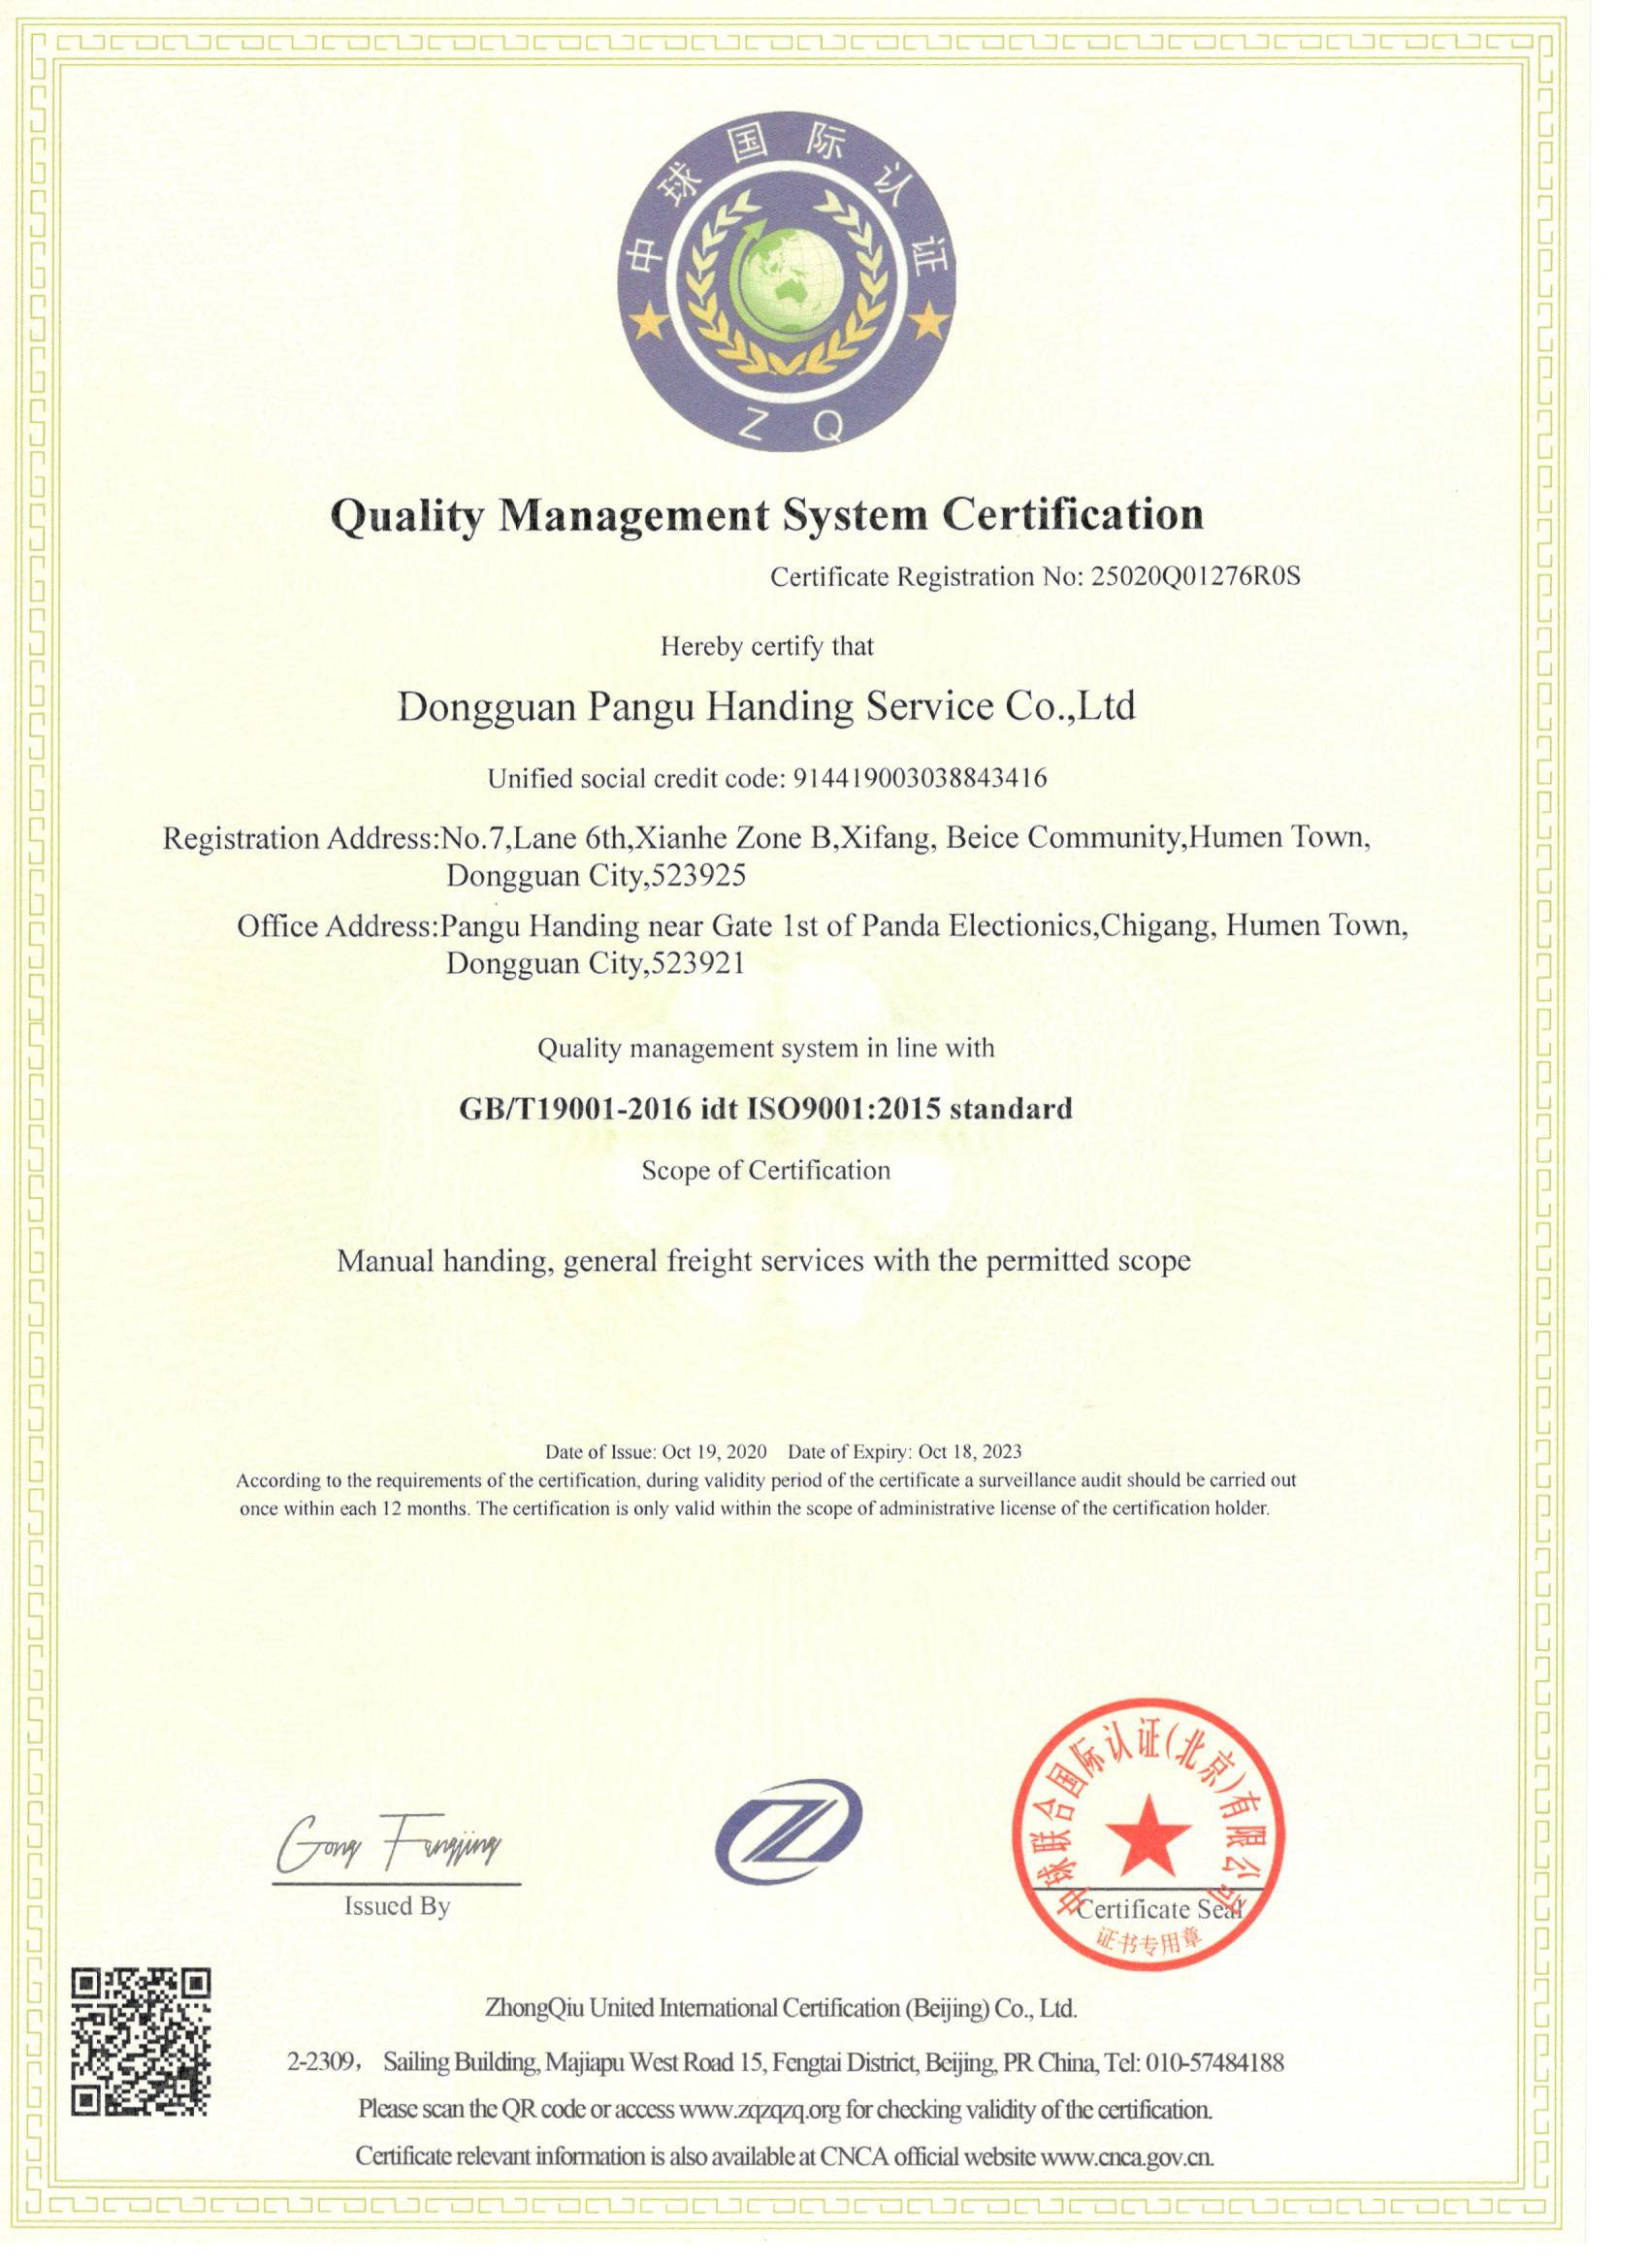 Quality Management System Certification认证-东莞市盘古搬运服务有限公司